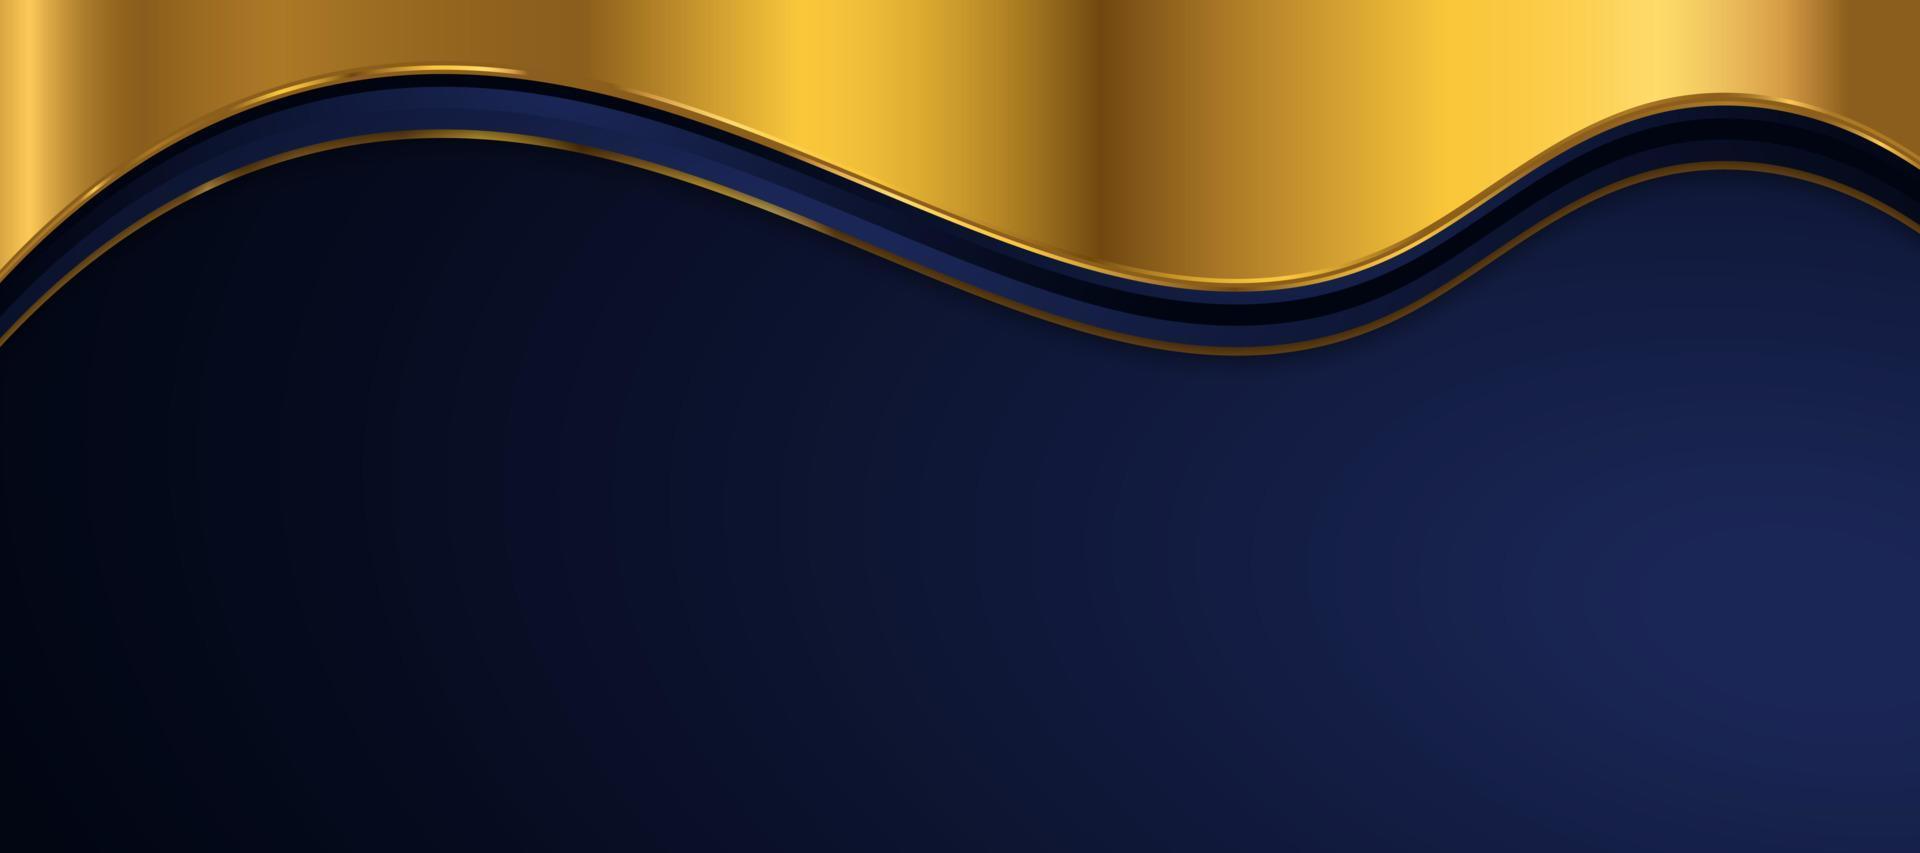 Elegant Premium Blue and Gold Background. Luxury Background for Award, Nomination, Ceremony, Formal Invitation or Certificate Design vector